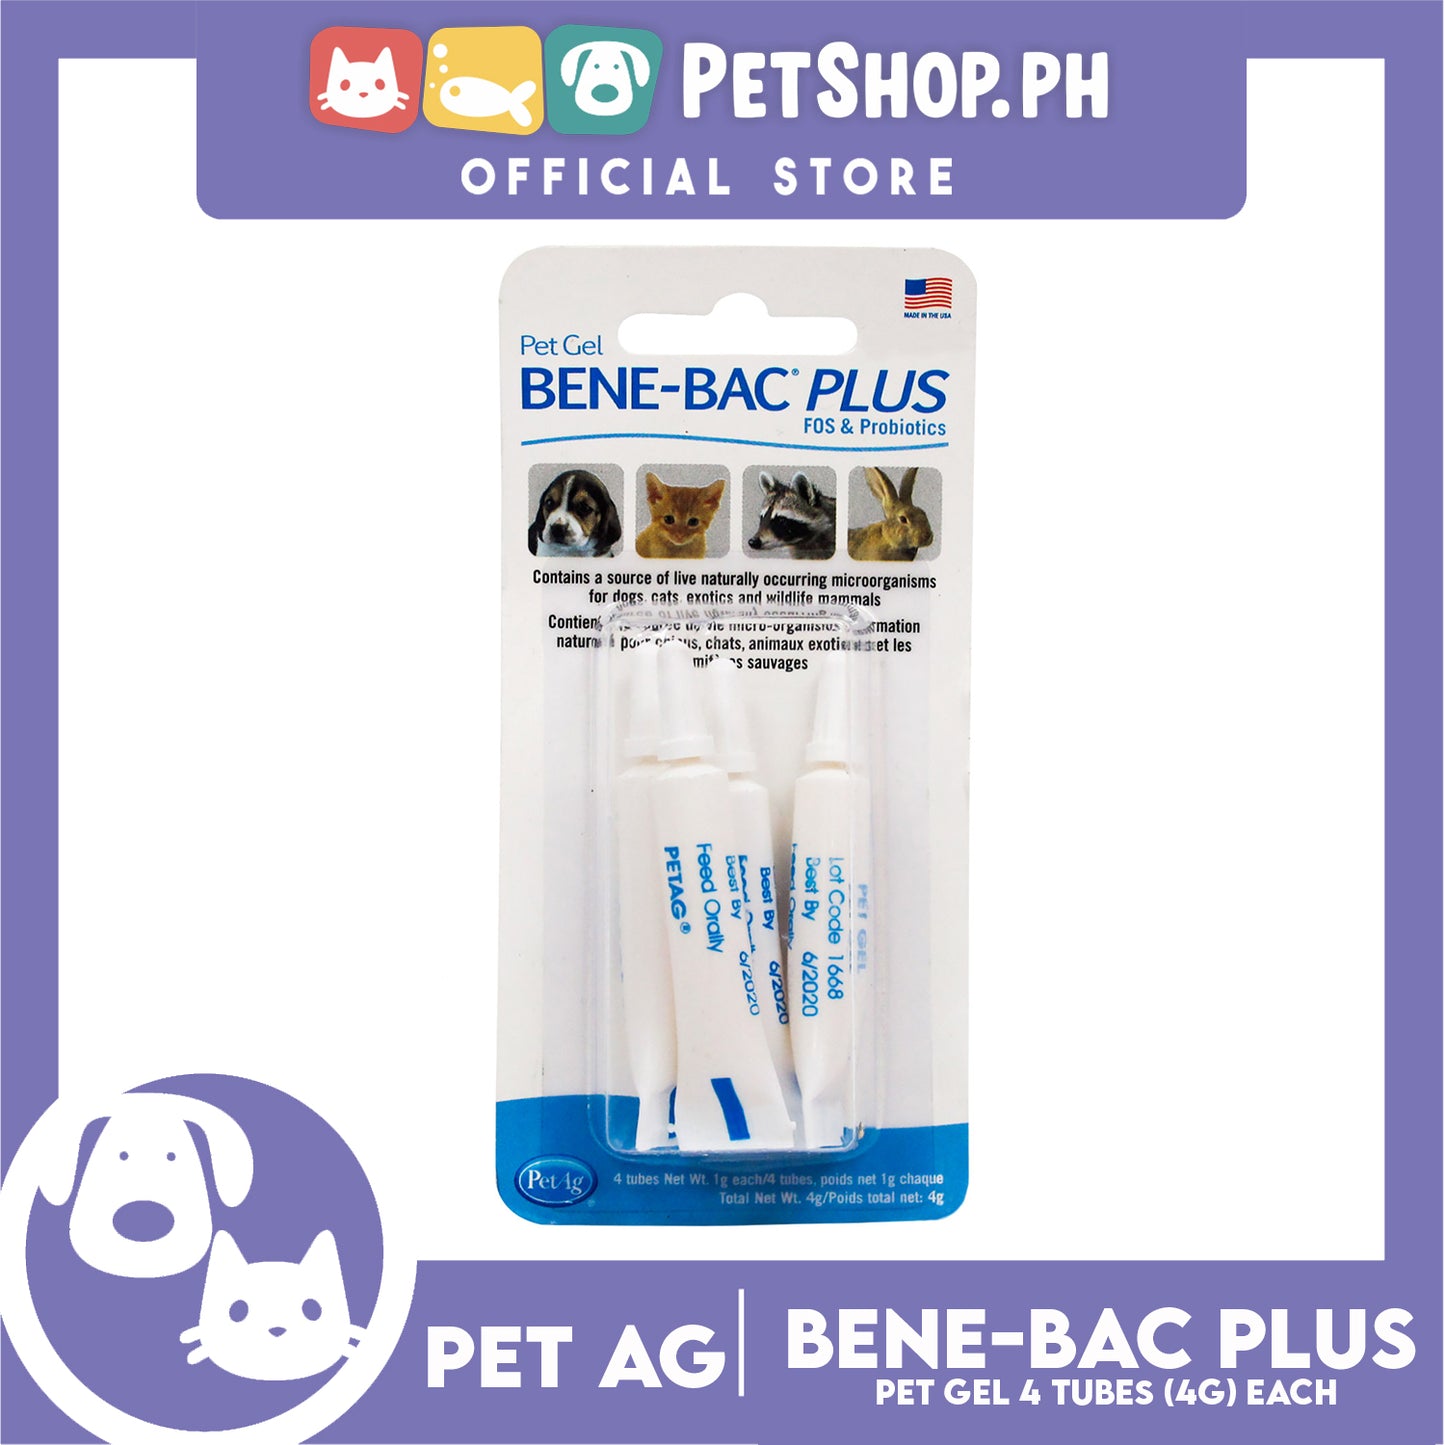 Pet Ag Bene-Bac Plus FOS and Probiotics 4g Pet Gel Set of 4 Tubes